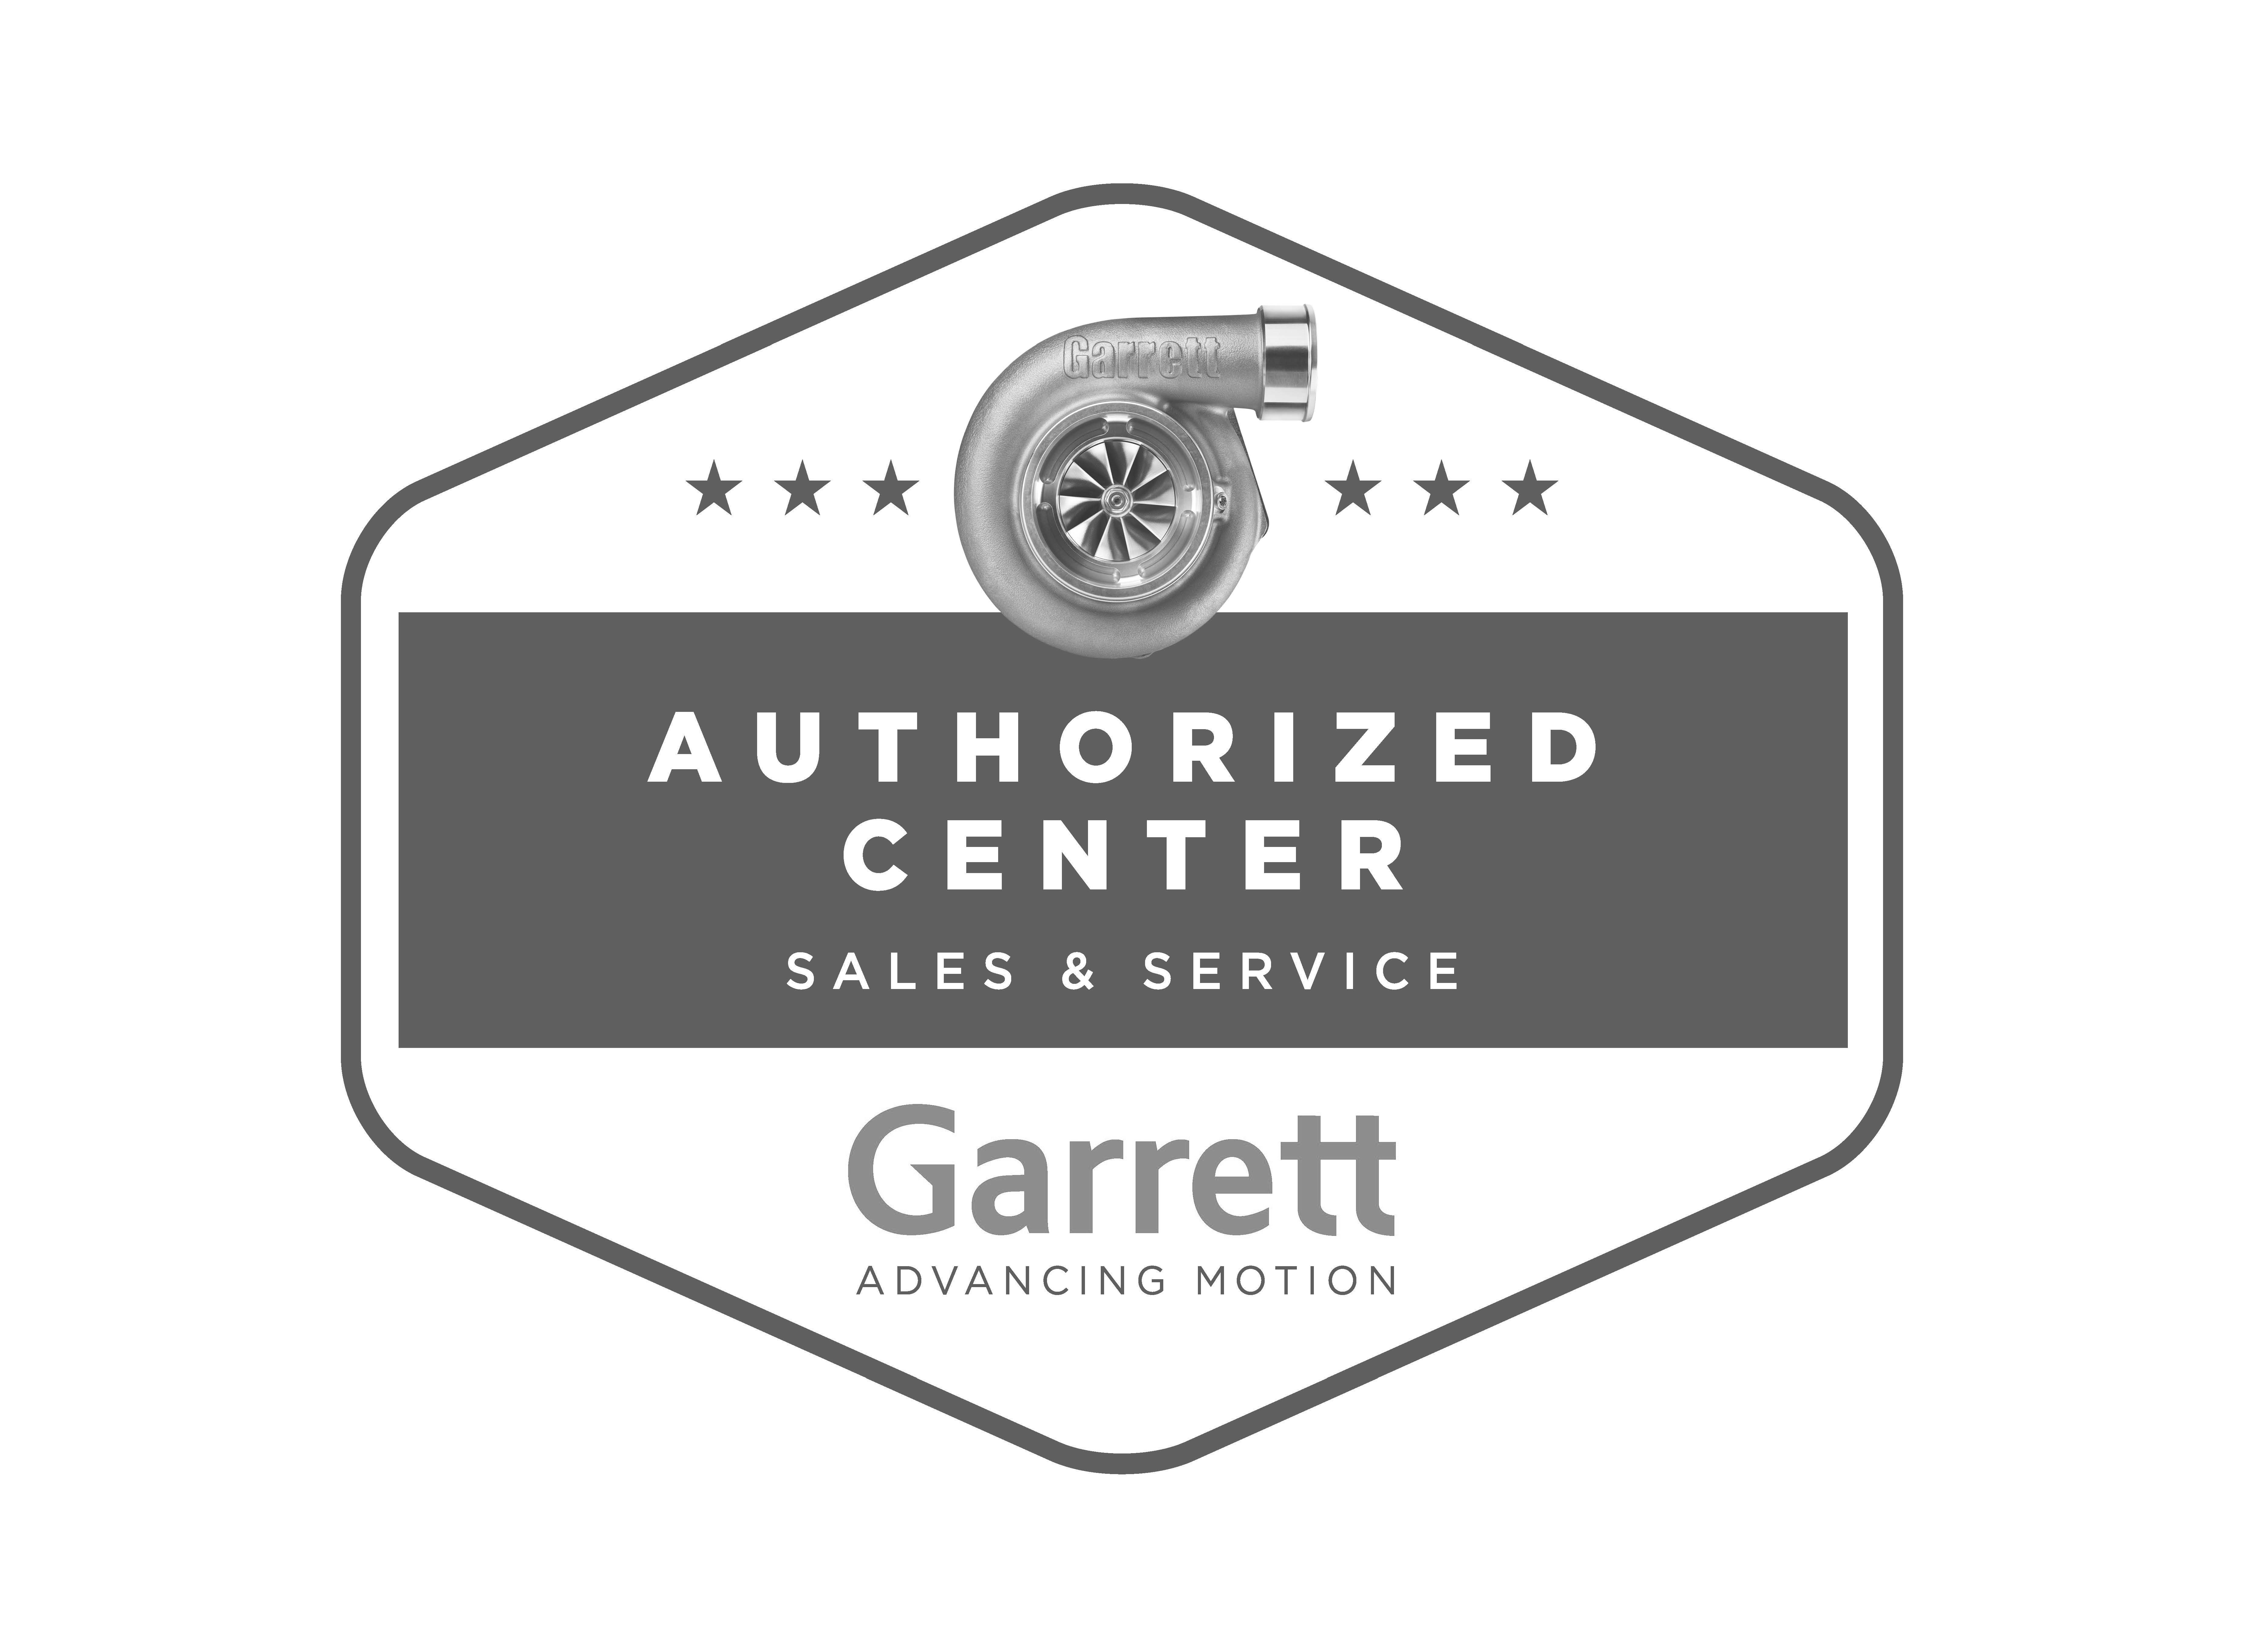  GARRETT AUTHORIZED CENTER SALES &amp; SERVICE GARRETT ADVANCING MOTION